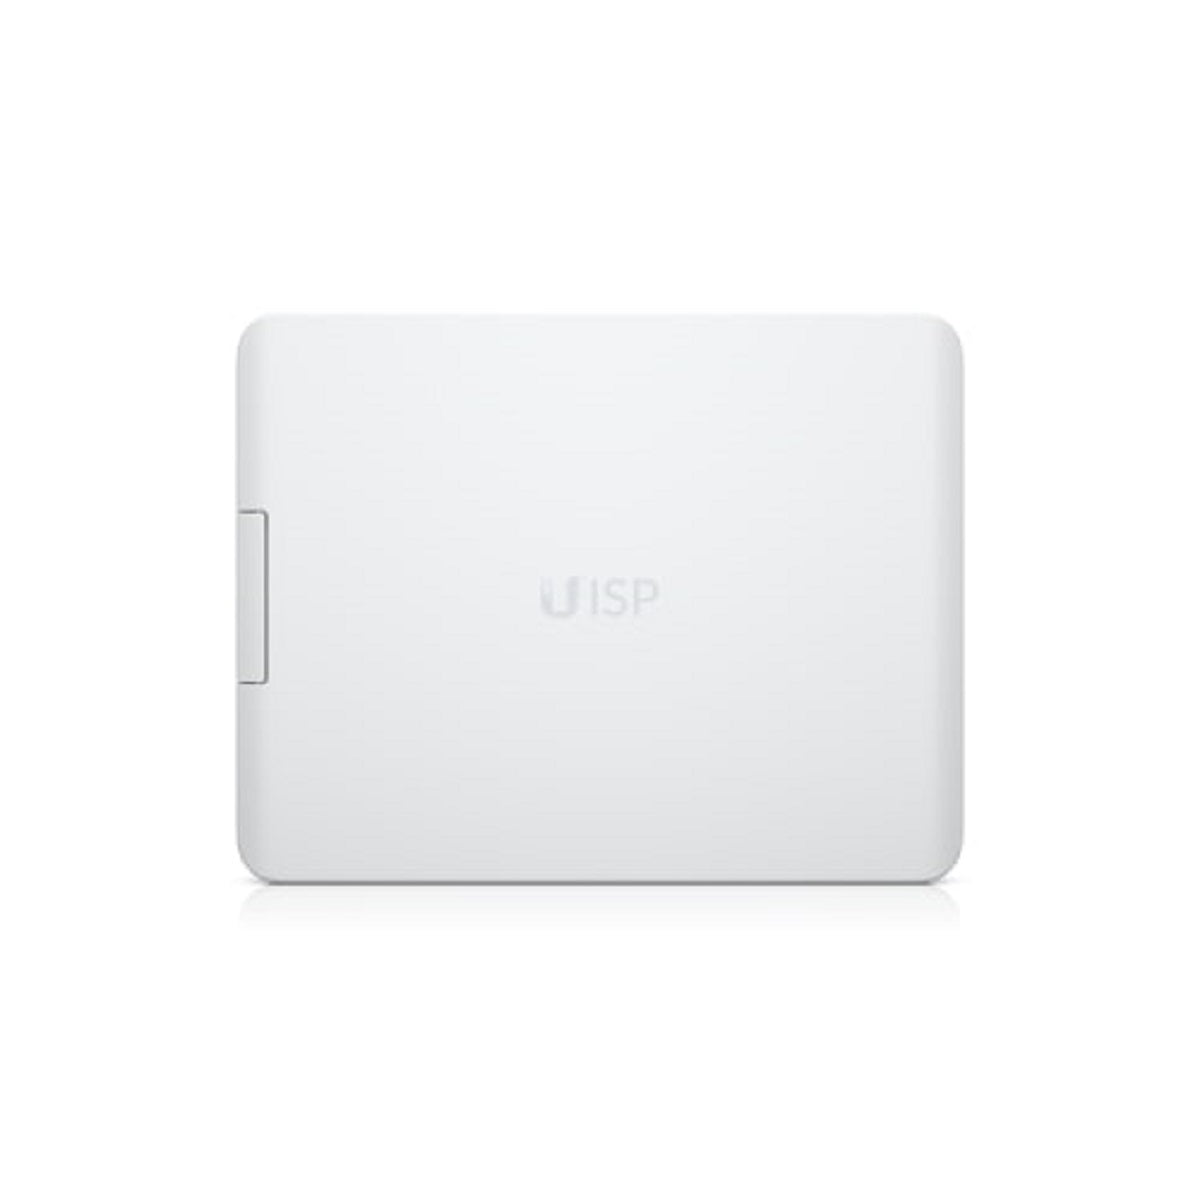 Ubiquiti UISP-Box Outdoor UISP Router/Switch Enclosure